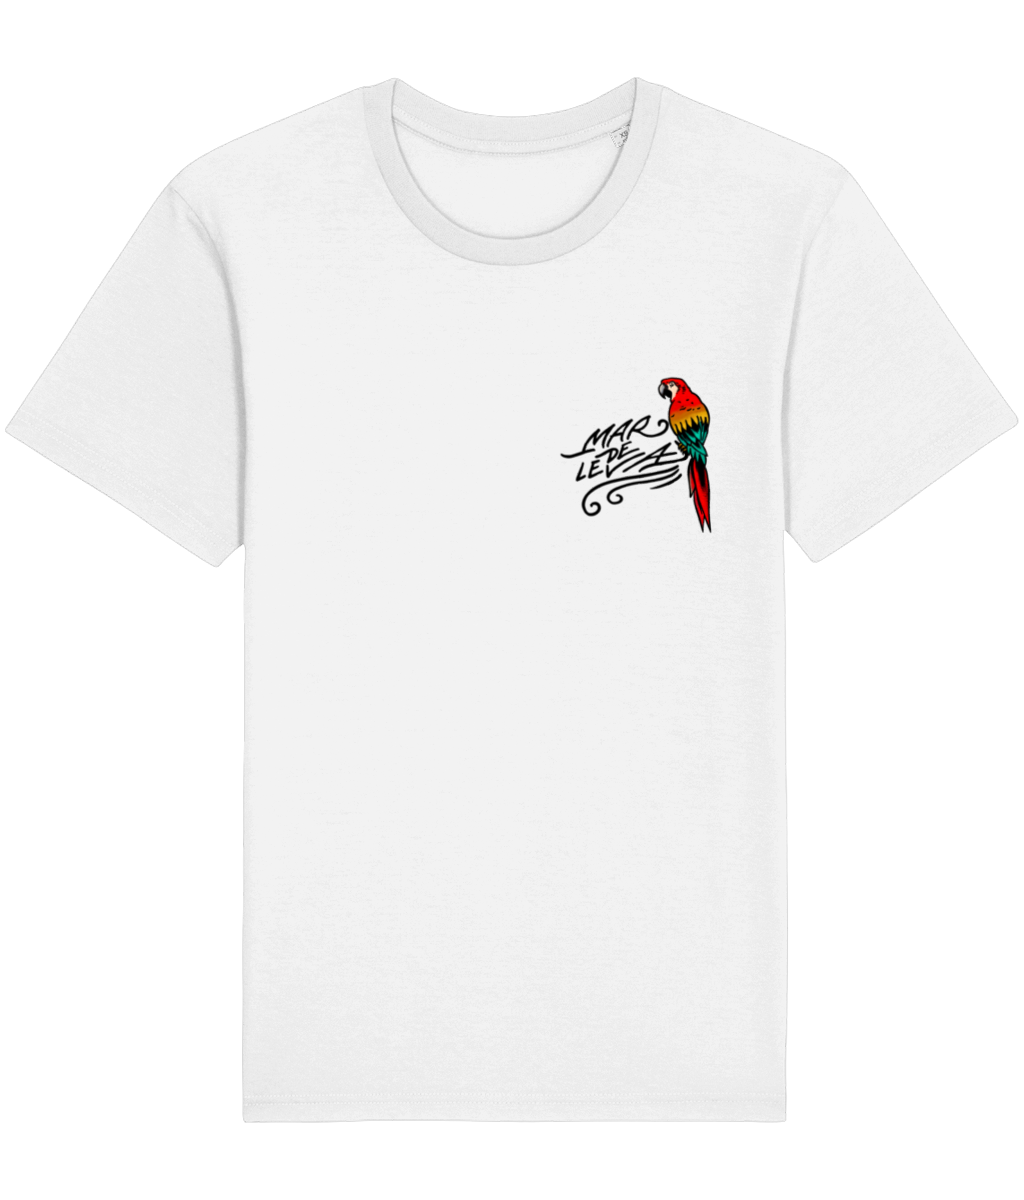 Camiseta Musa Caribeña - Mar de Leva